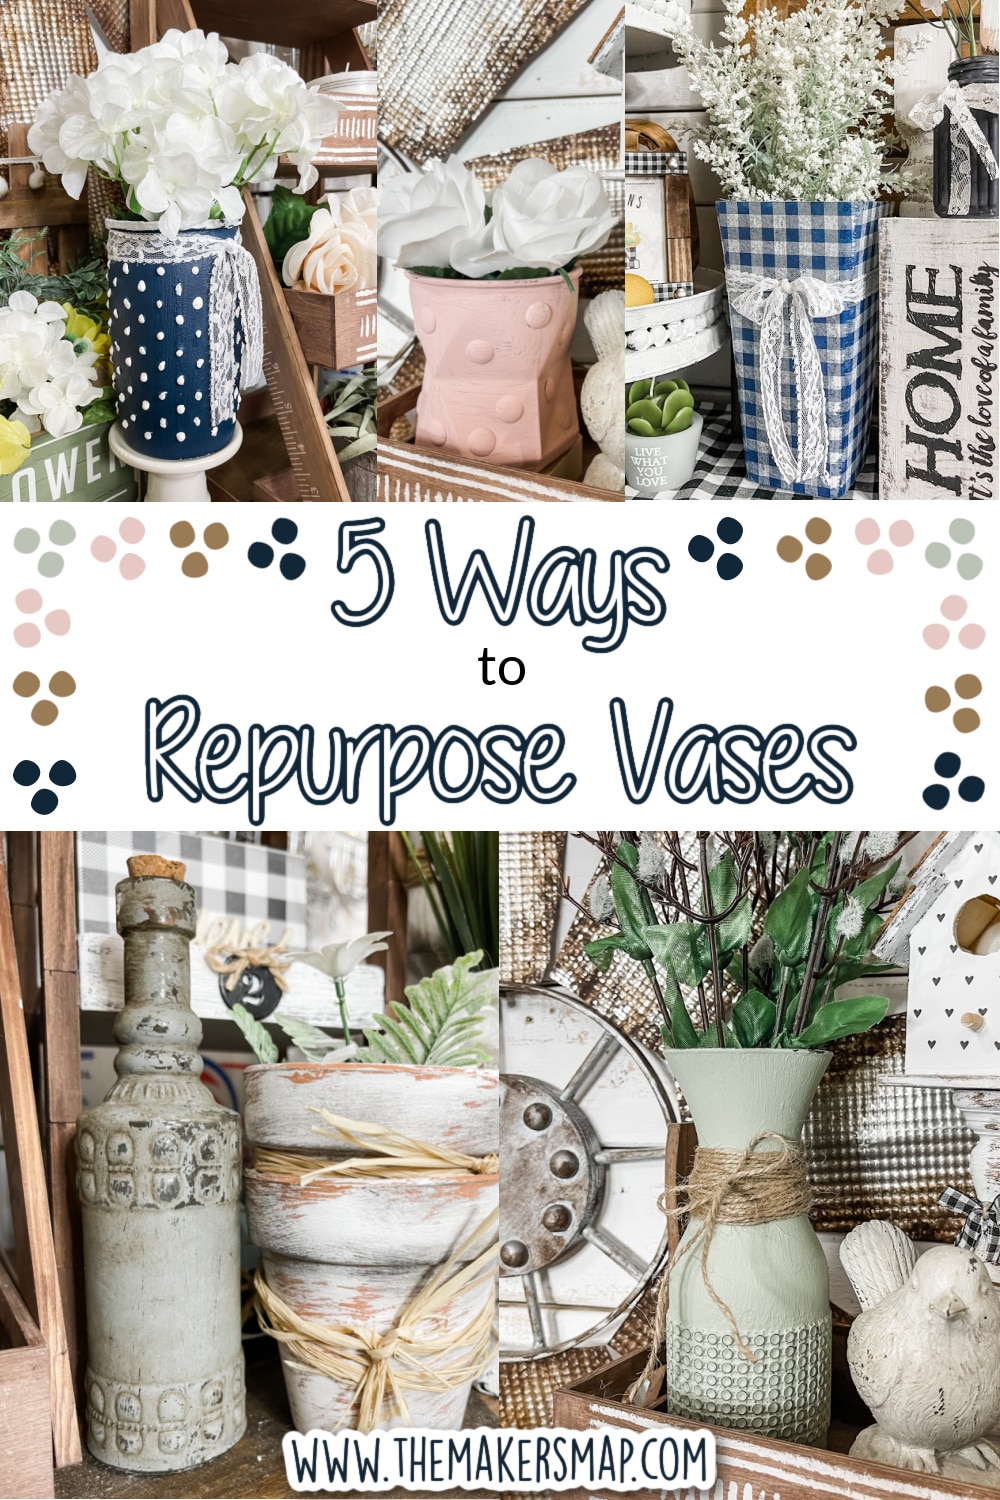 5 Ways to Repurpose Vases